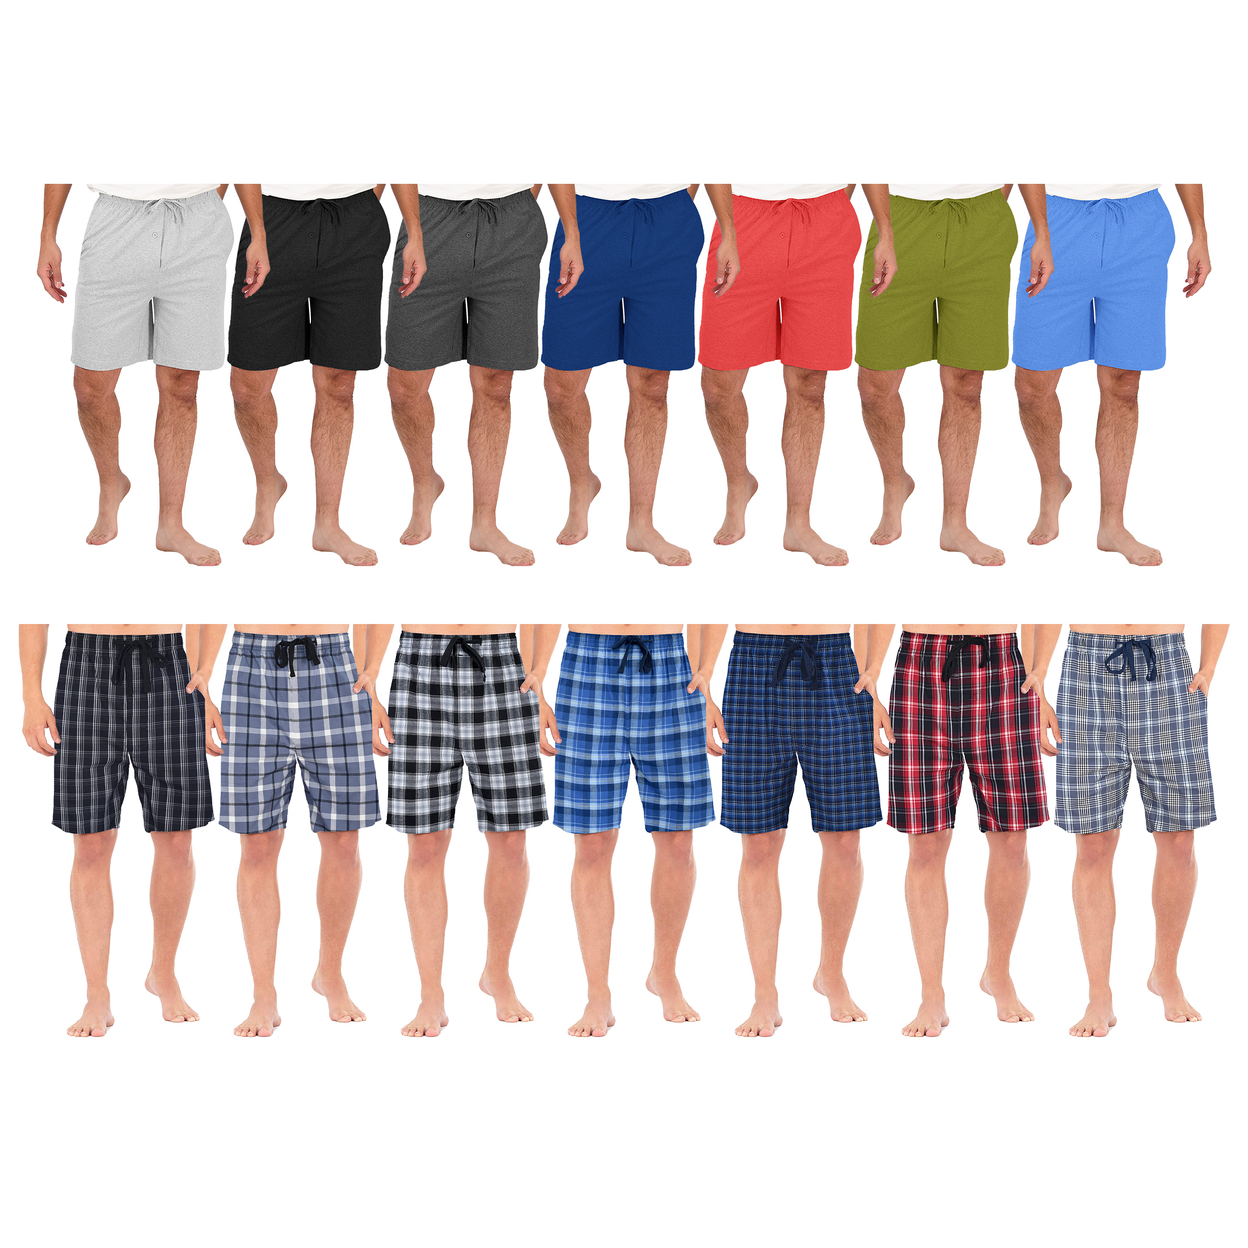 Multi-Pack: Men's Ultra Soft Knit Lounge Pajama Sleep Shorts - Plaid, 1-pack, X-large